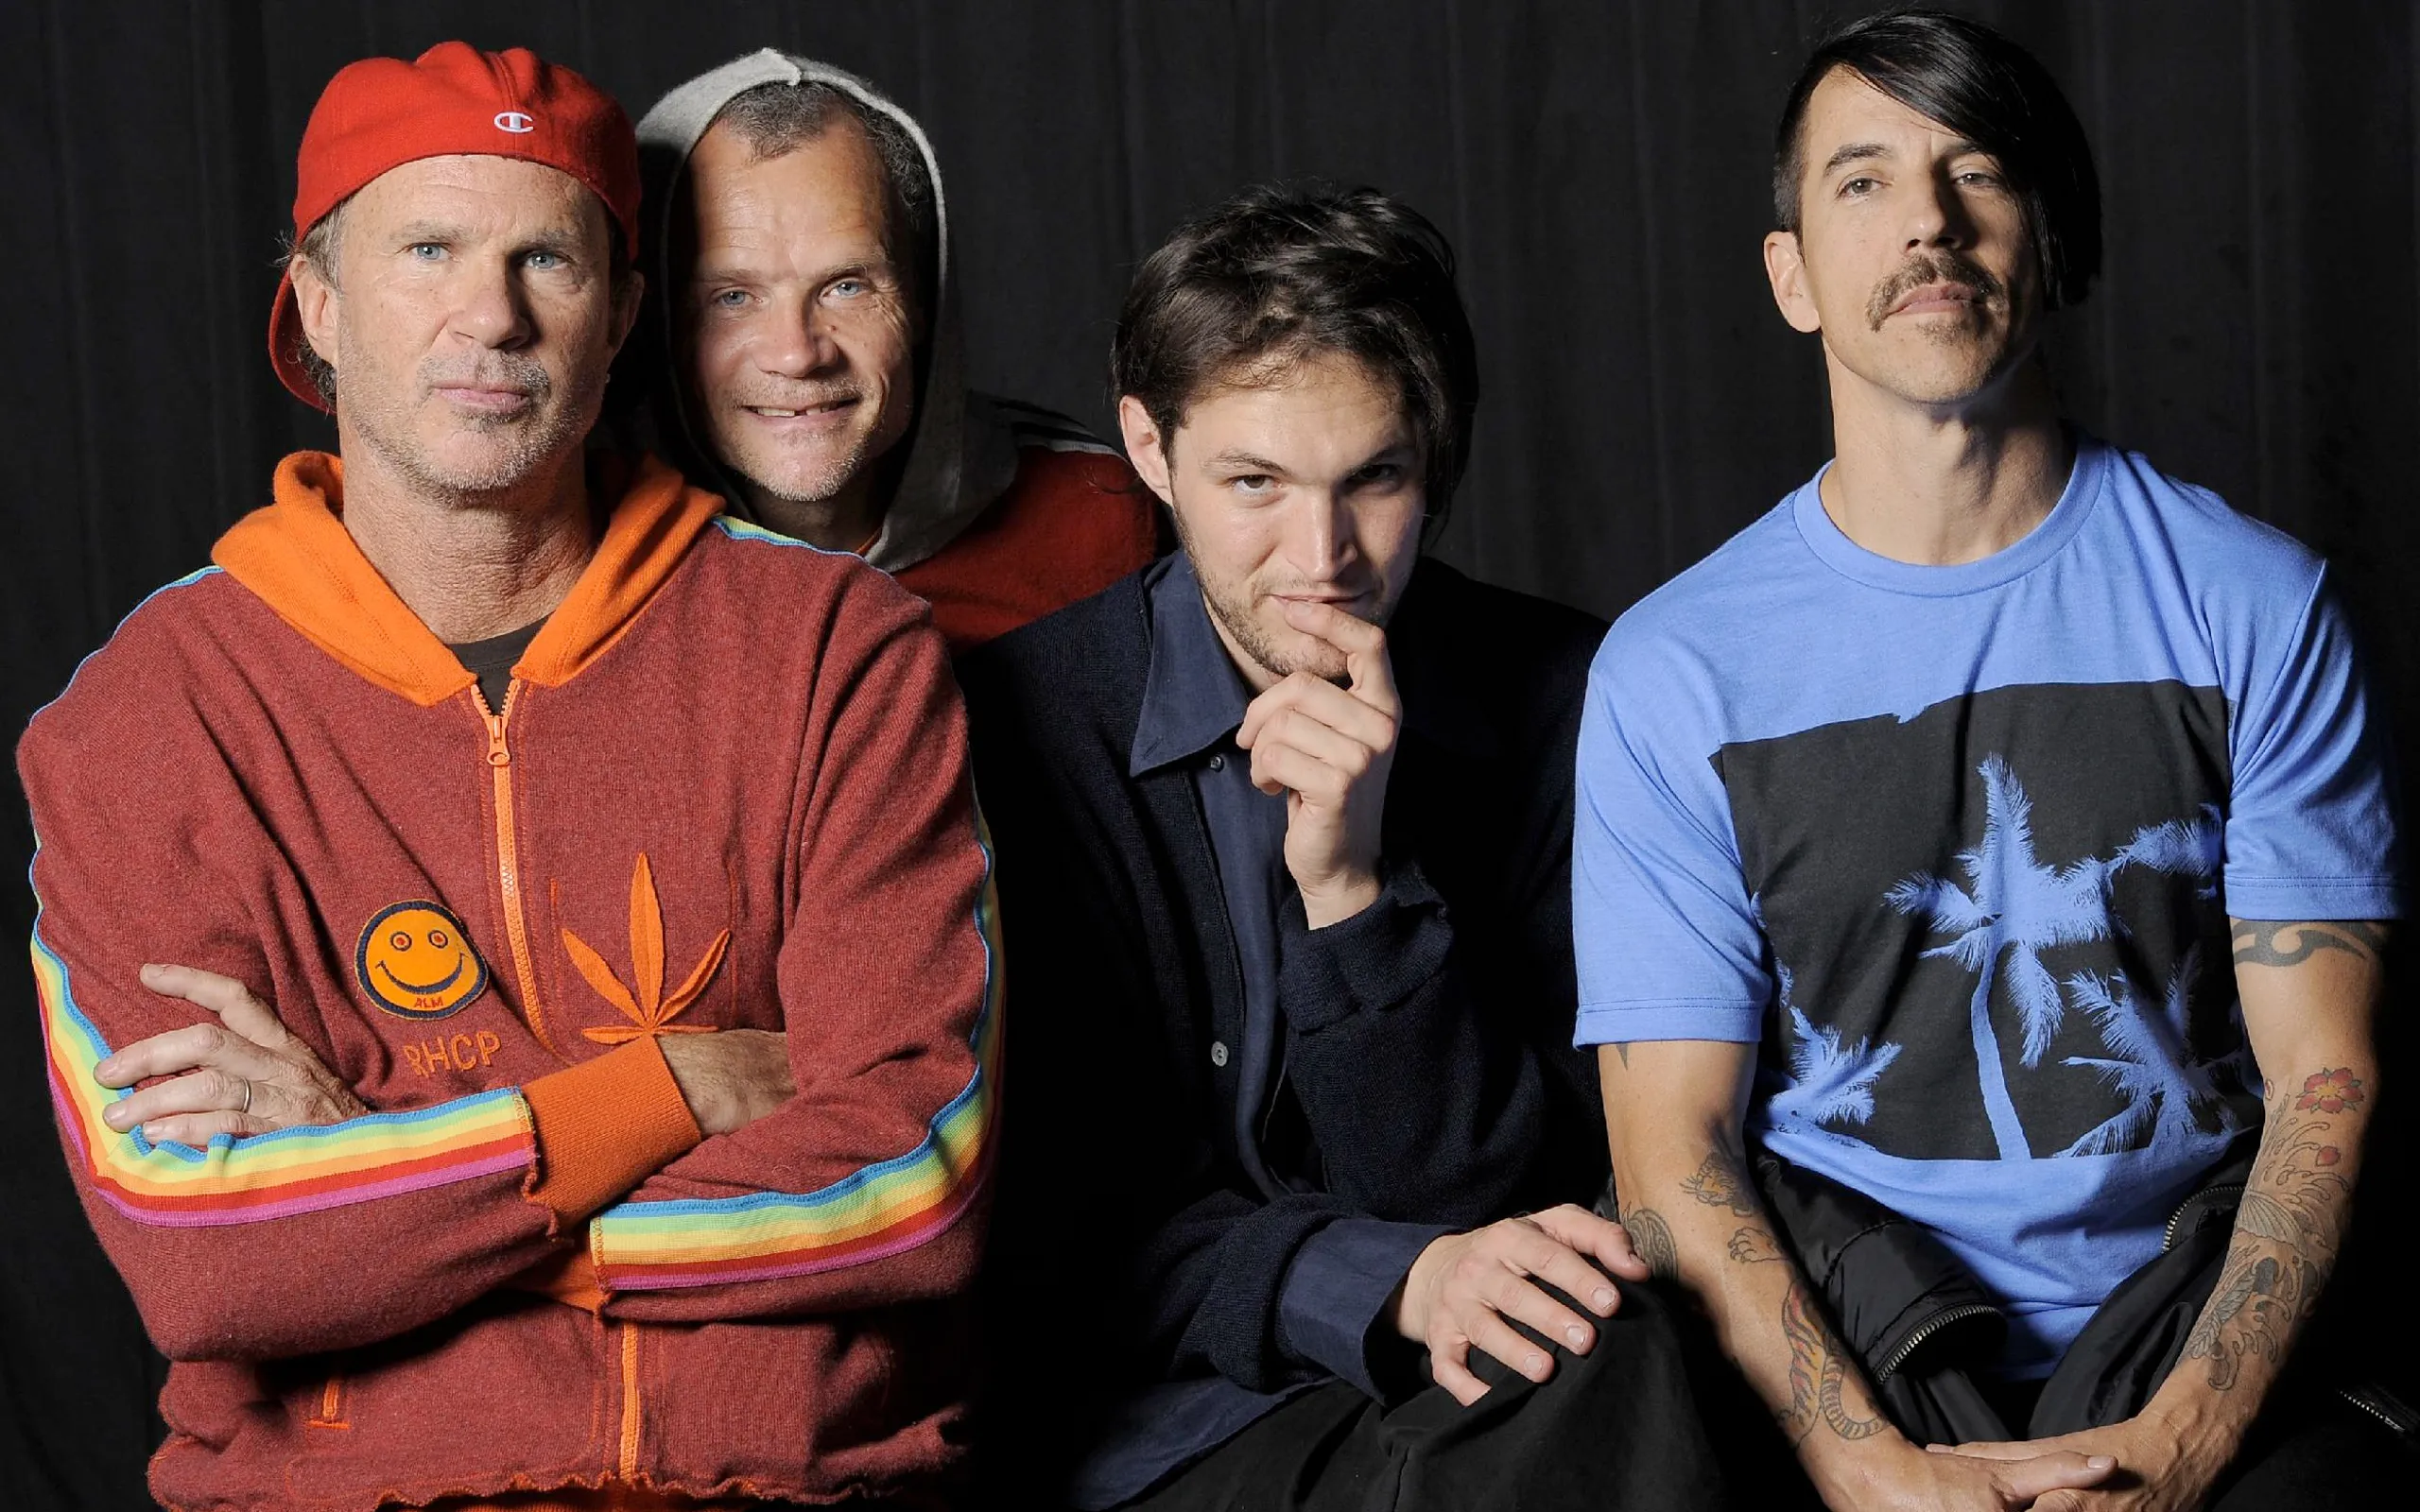 Pepper клип. Группа ред хот Чили пеперс. Группа Red hot Chili Peppers 2022. Ред хот Чили пеперс 2000. Барабанщик ред хот Чили пеперс.